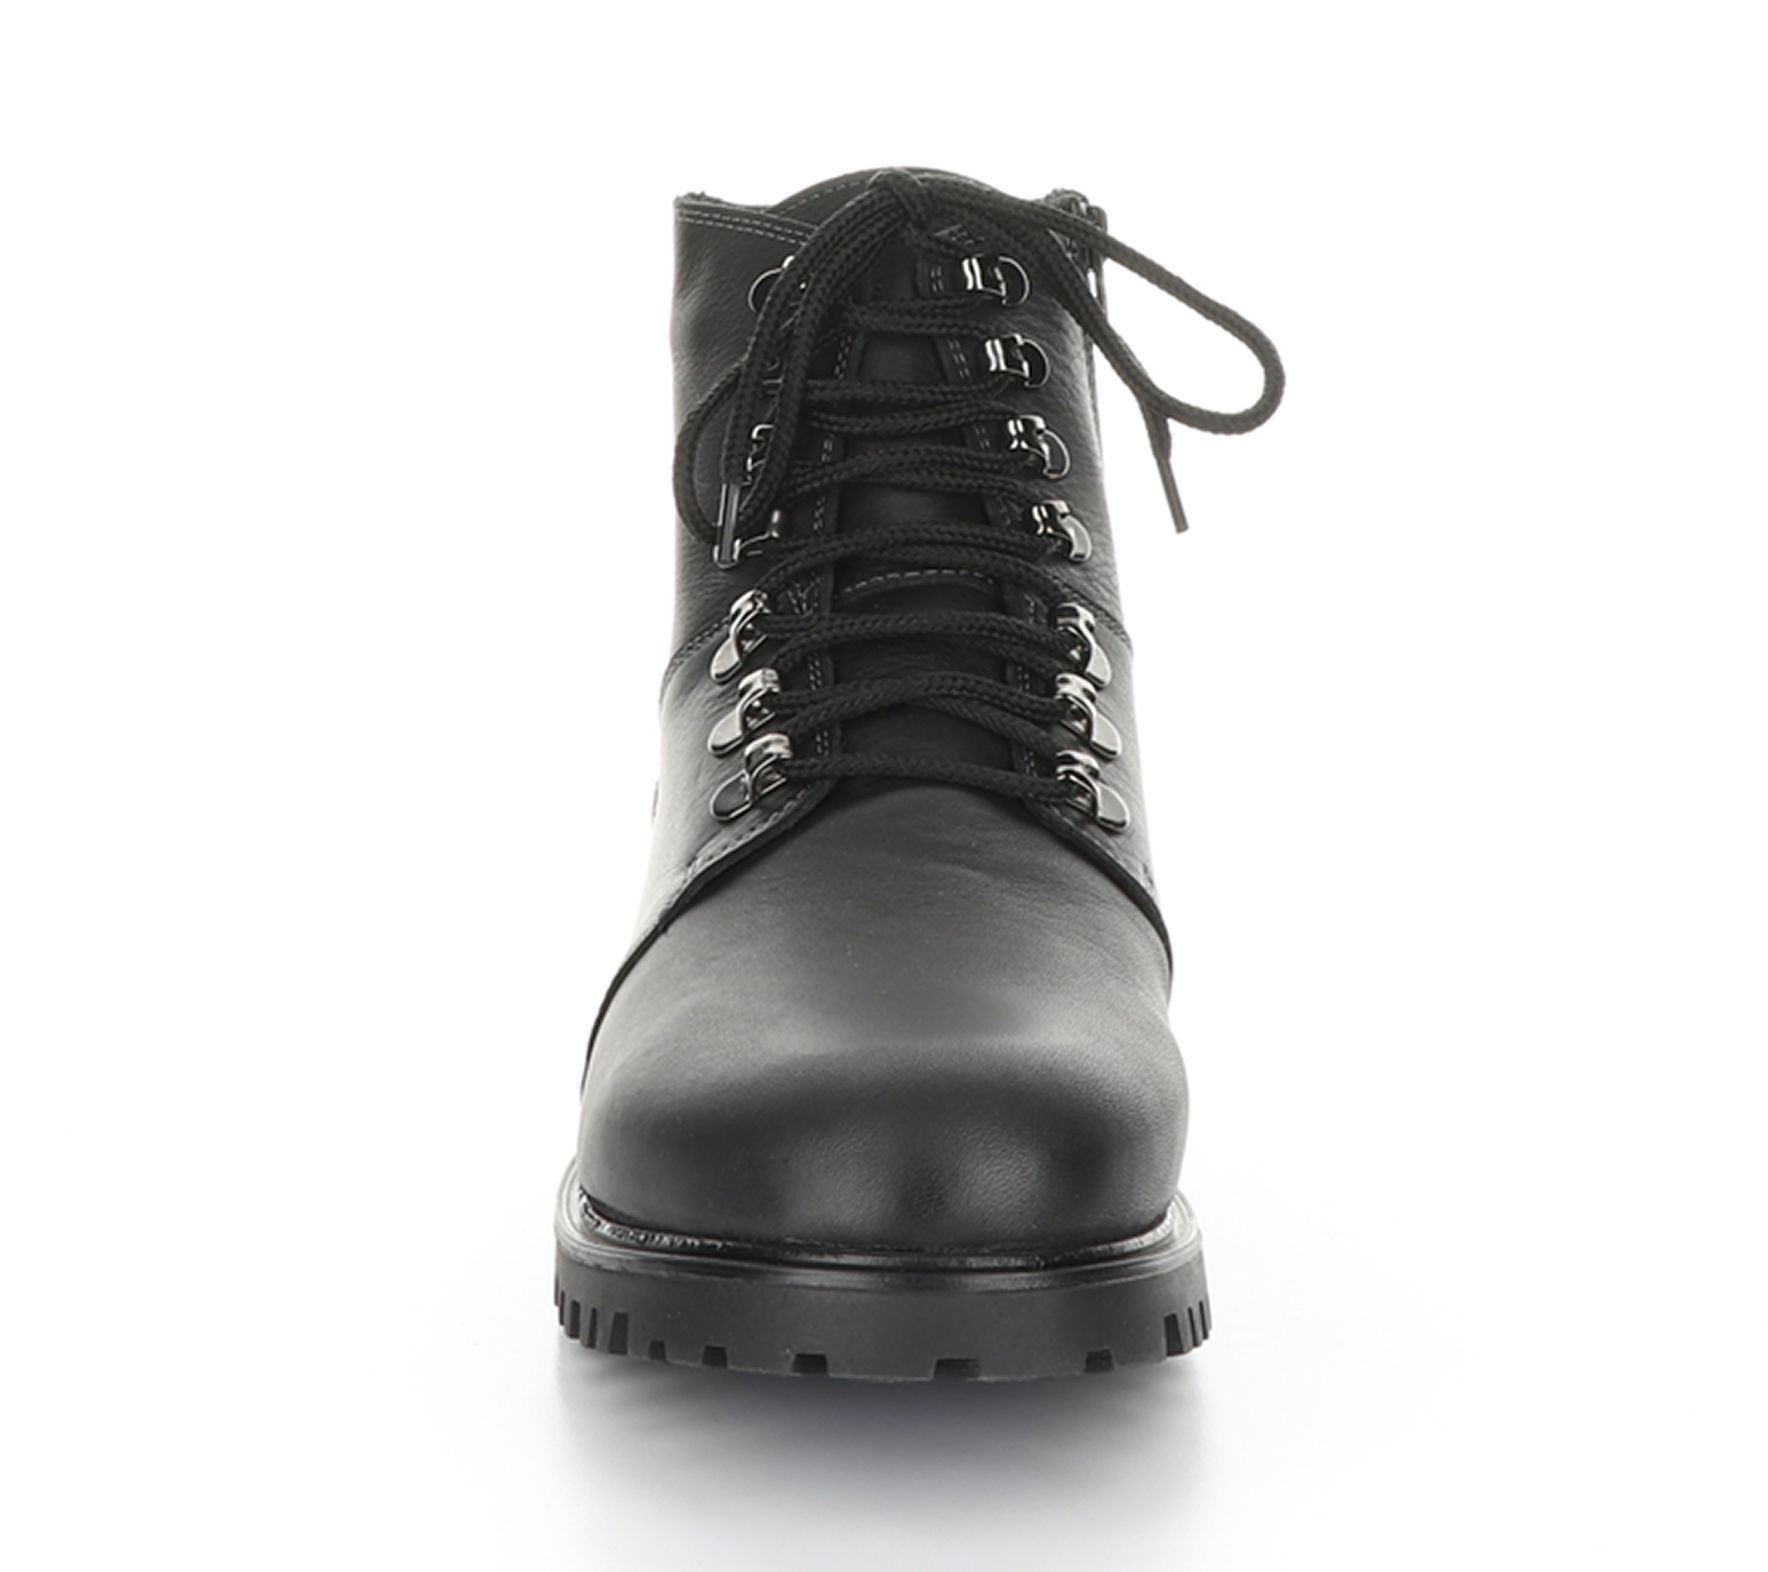 Bos. & Co. Men's Winter Leather Side Zip Boots-Dawson - QVC.com